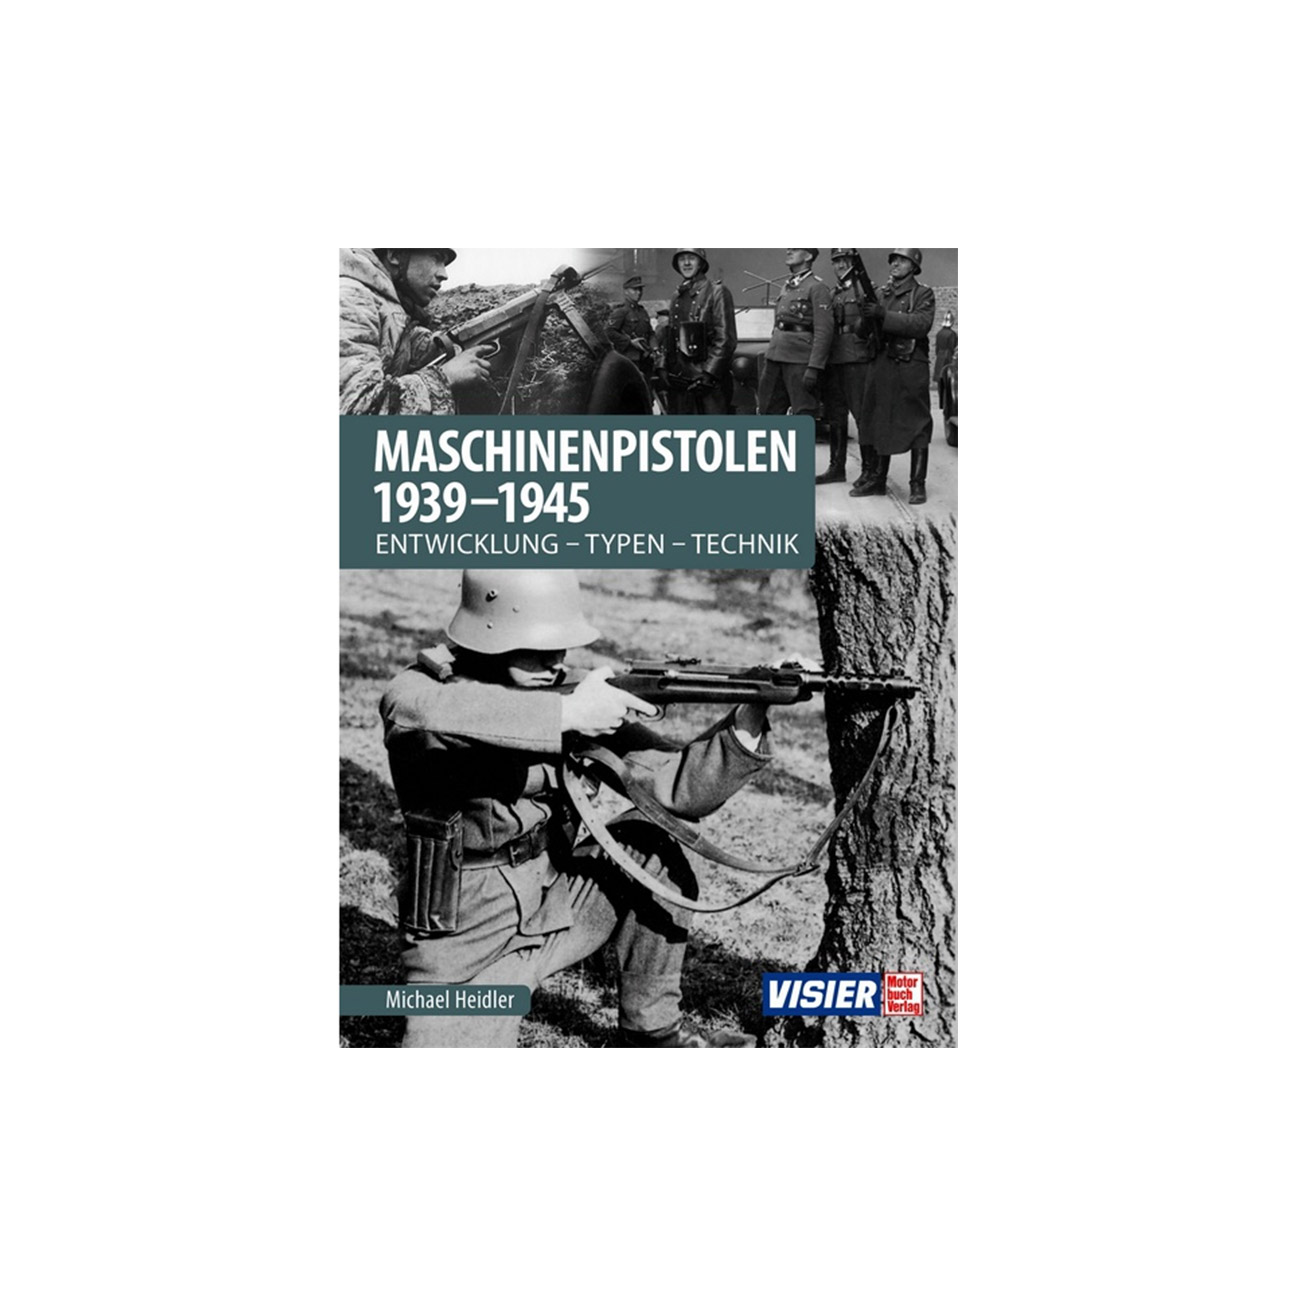 Maschinenpistolen 1939-1945 - Entwicklung, Typen, Technik